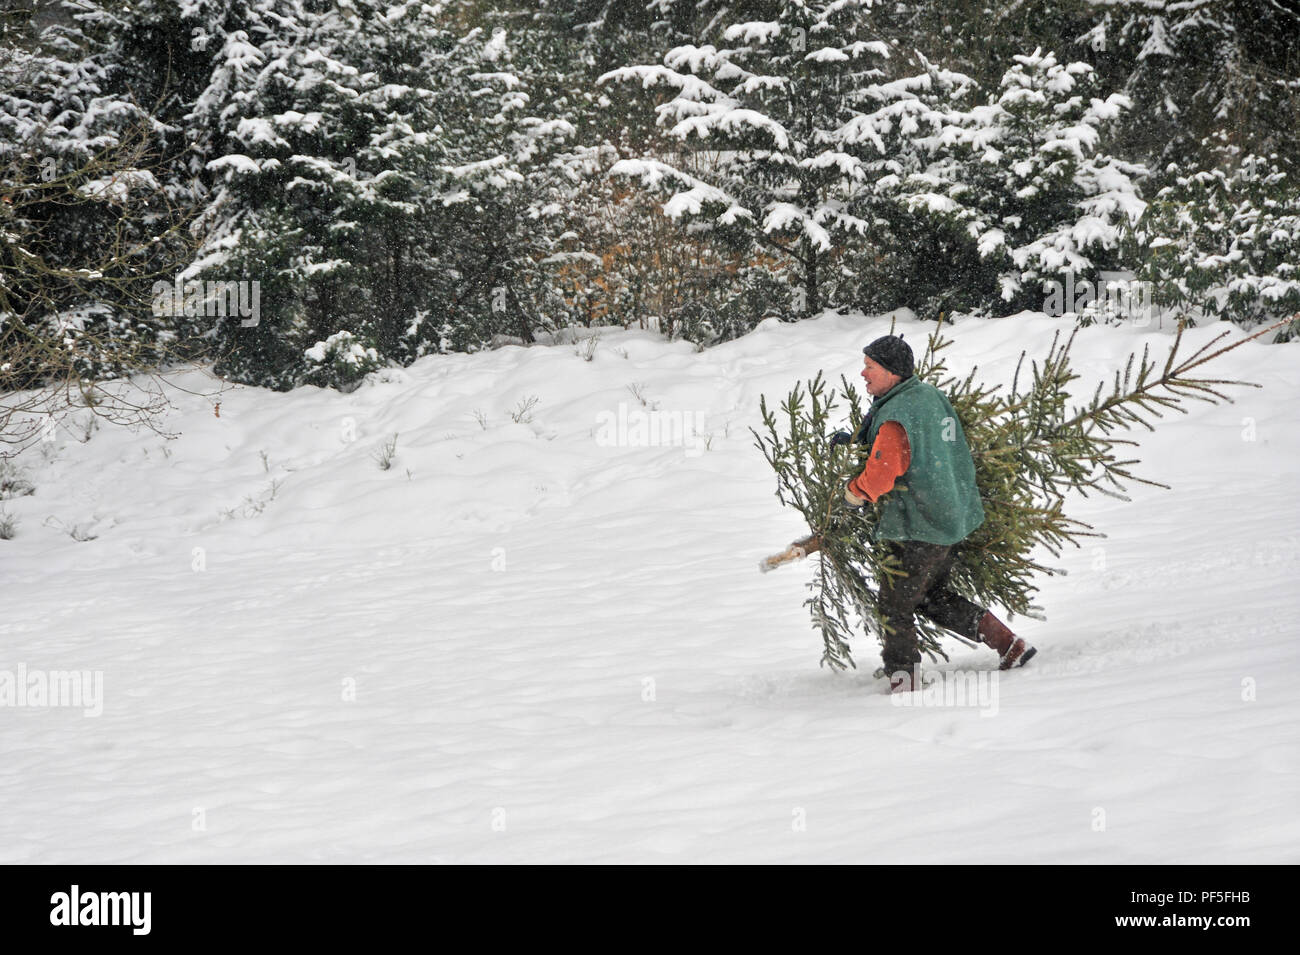 Mann Weihnachtsbaum trägt im Schnee | uomo porta albero di Natale home, camminando attraverso la neve profonda Foto Stock